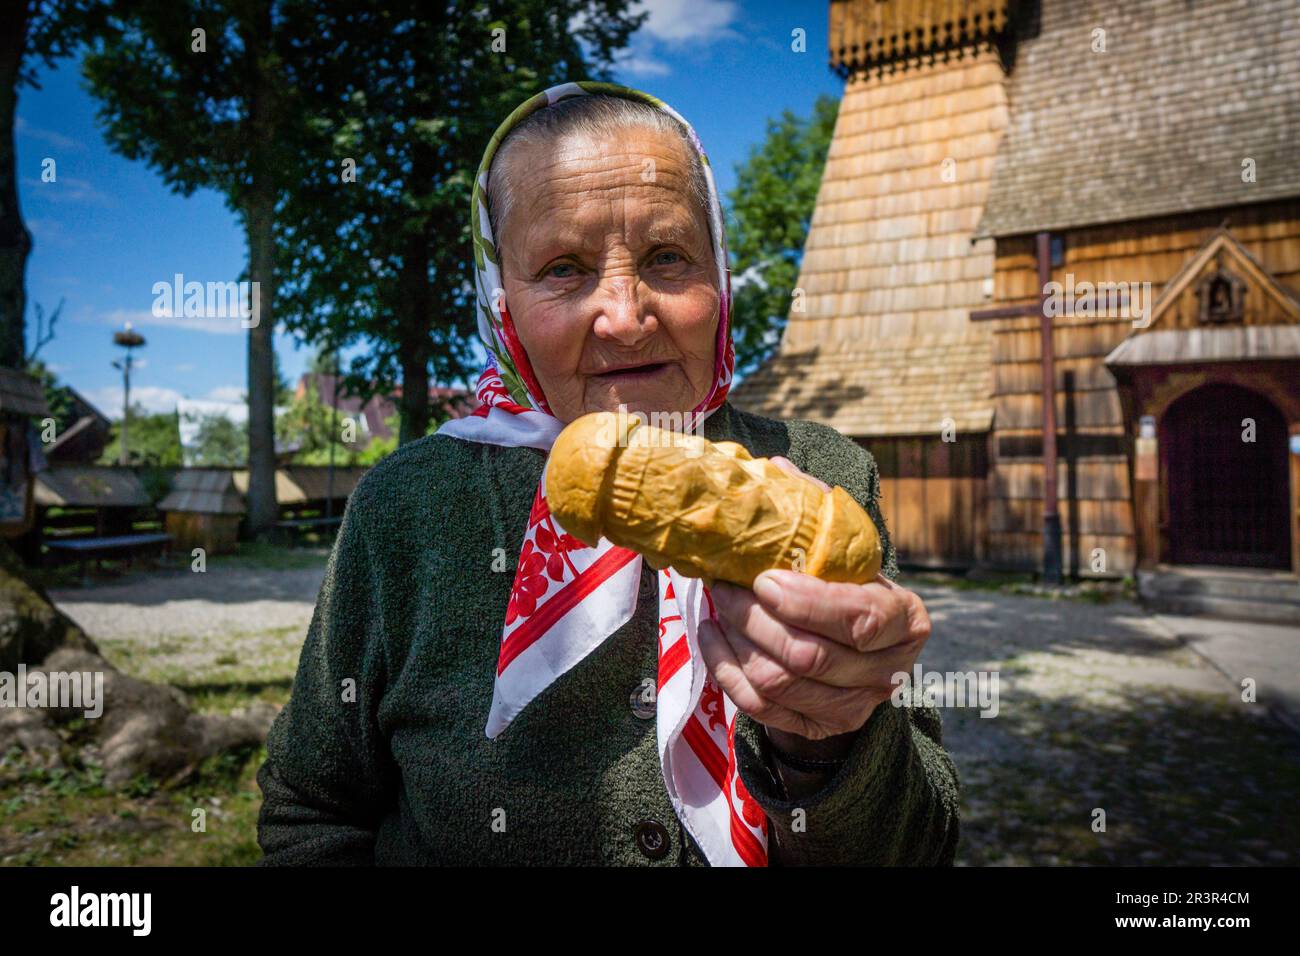 aldeana vendiendo queso Oscypeck frente a la iglesia de madera de Dbno , voivodato de la Pequeña Polonia, Cárpatos, Polonia, europe. Stock Photo